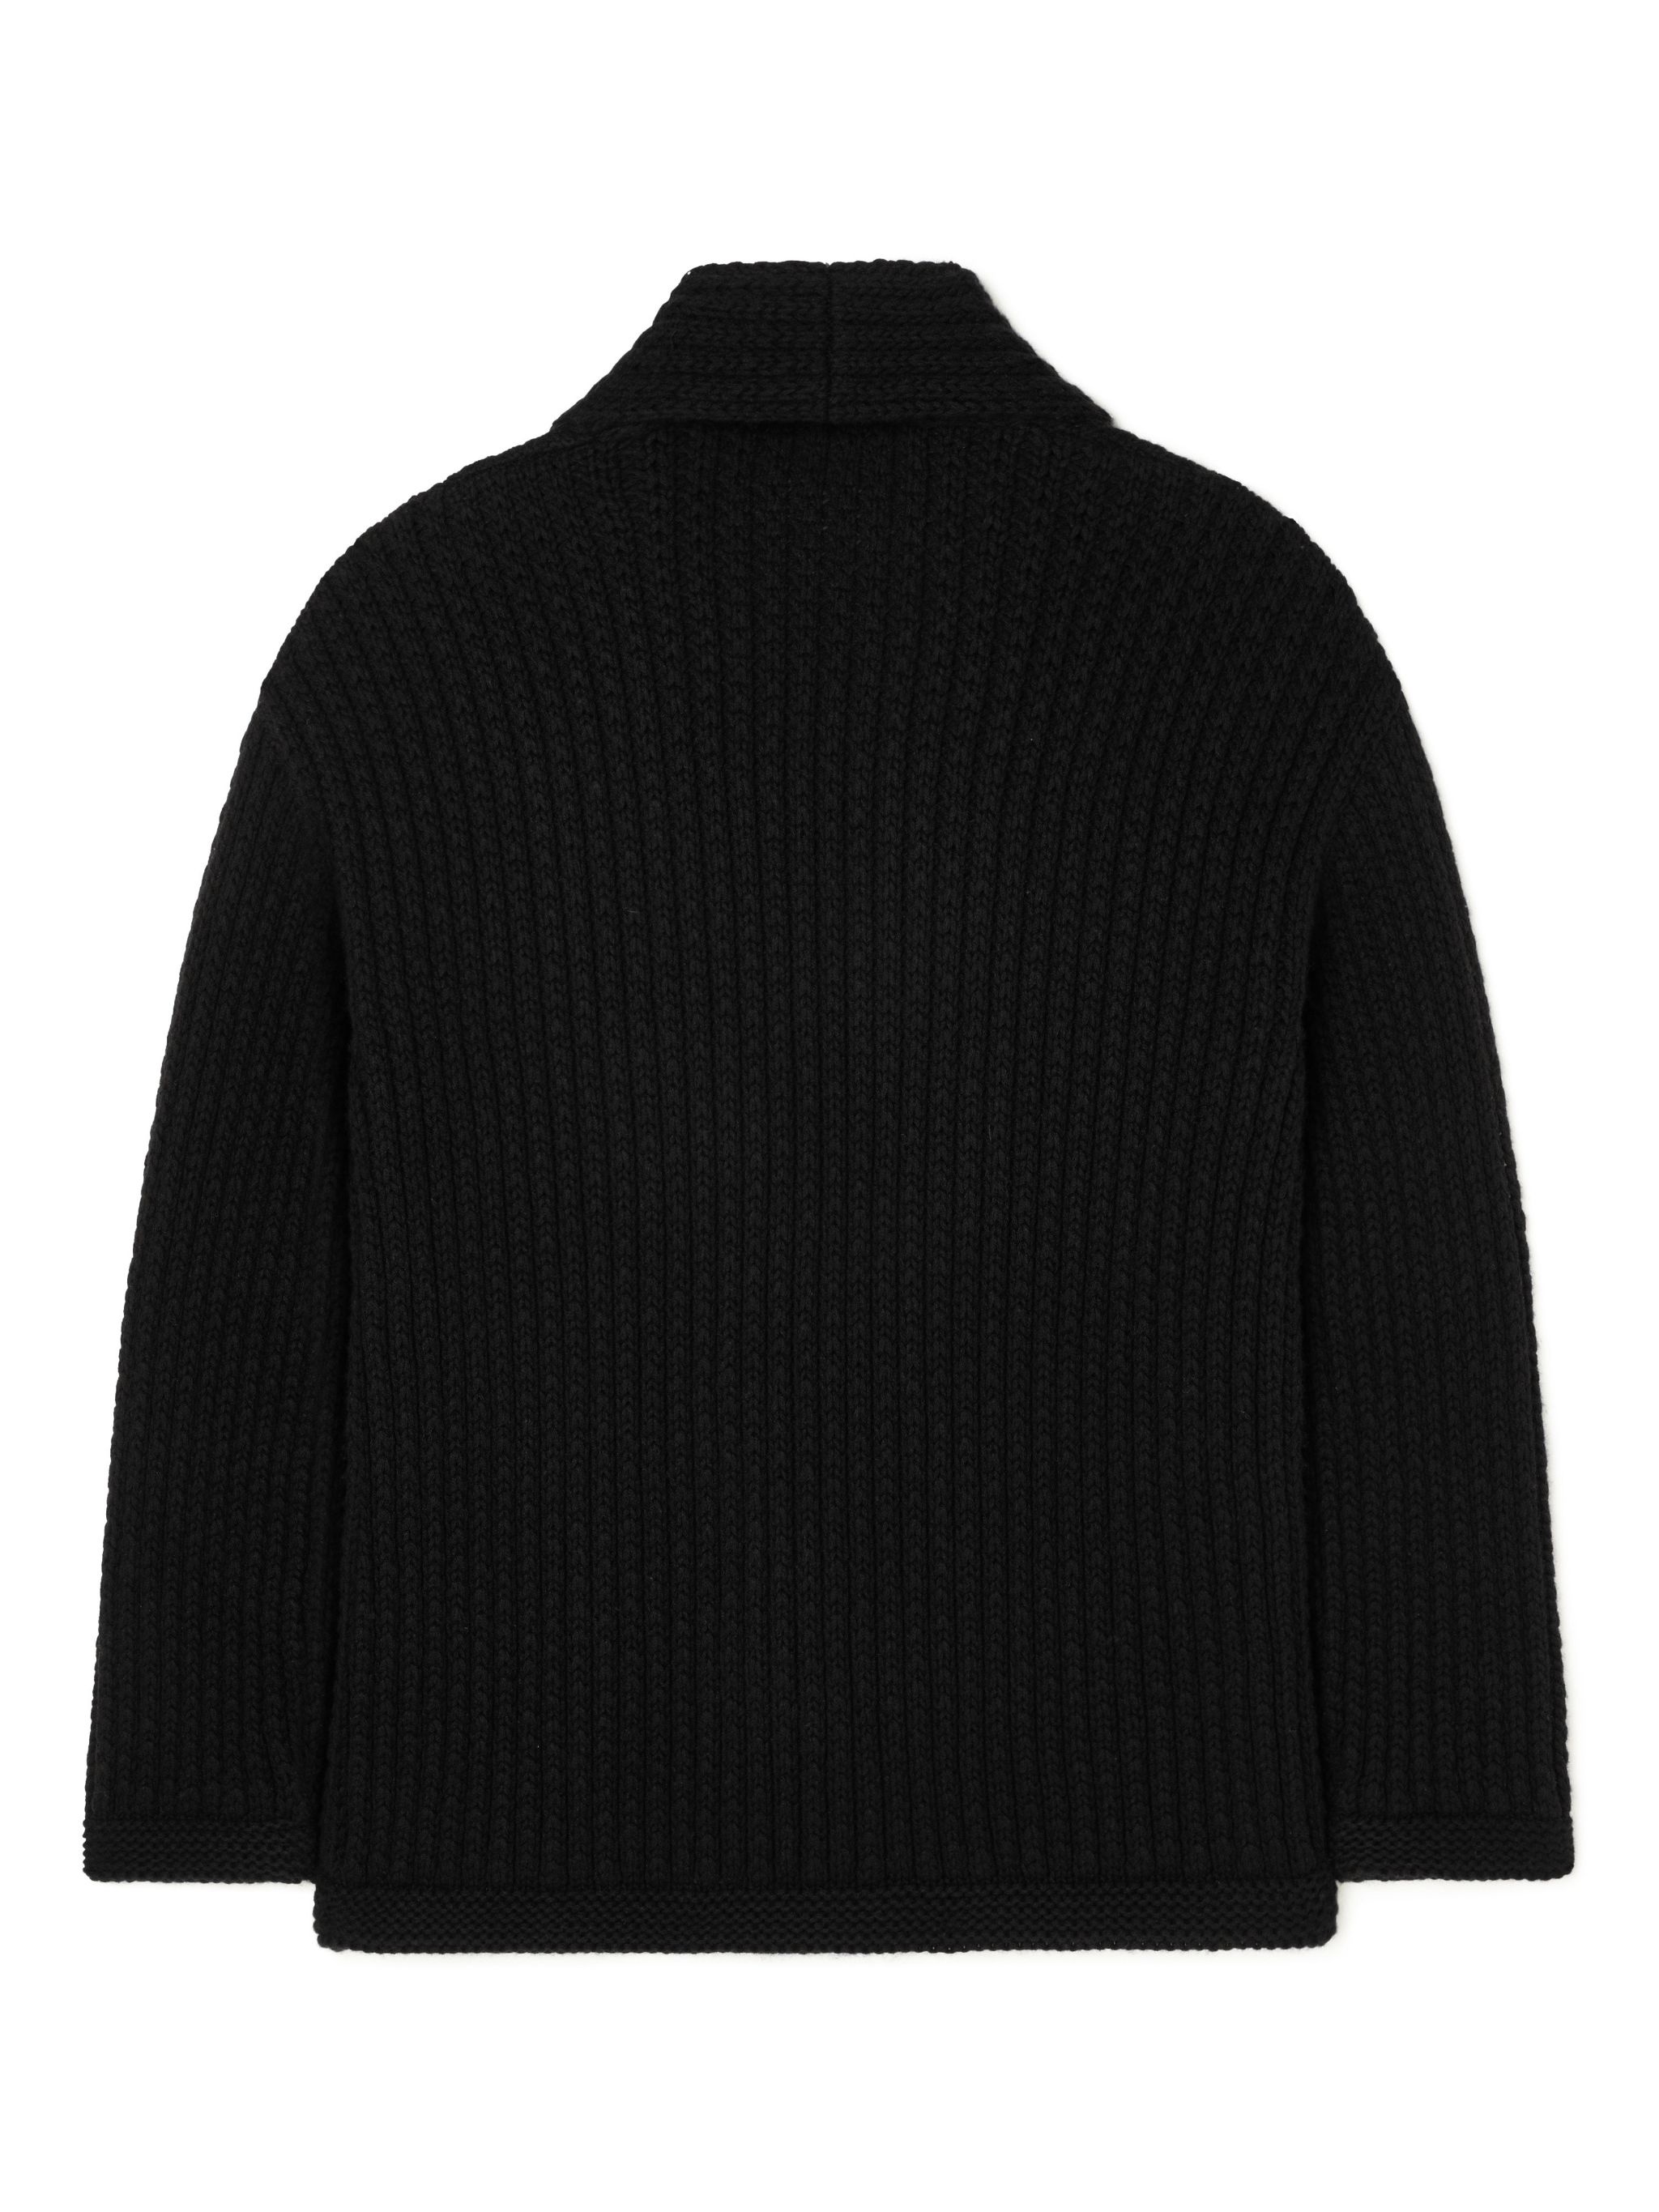 A Finest Knit Cardigan - 3